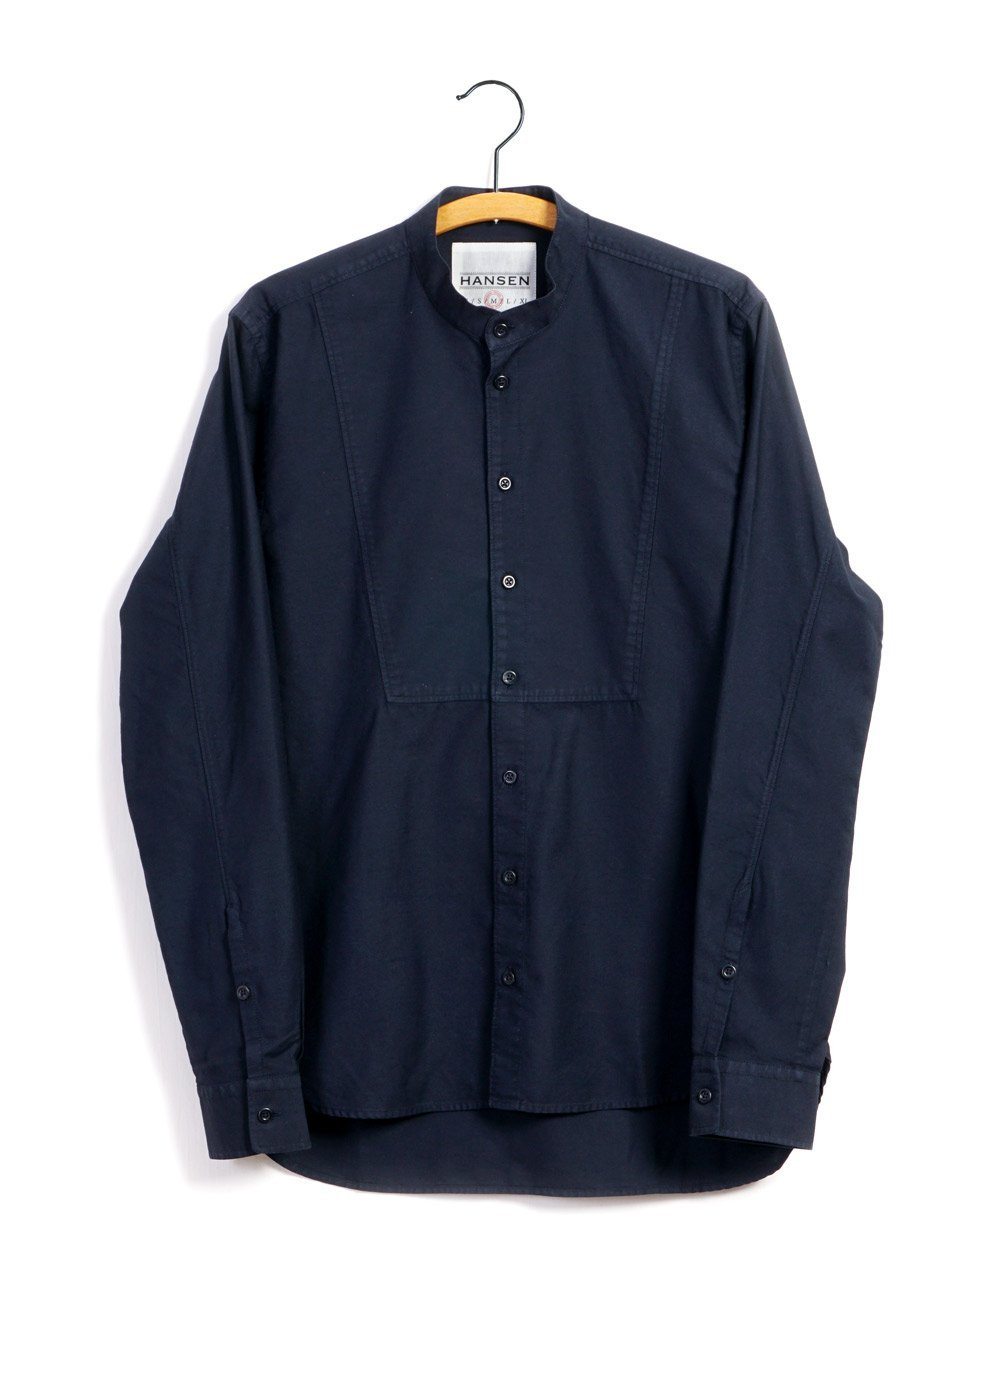 HANSEN Garments - VALMAR | Collarless Bib Shirt | Navy - HANSEN Garments